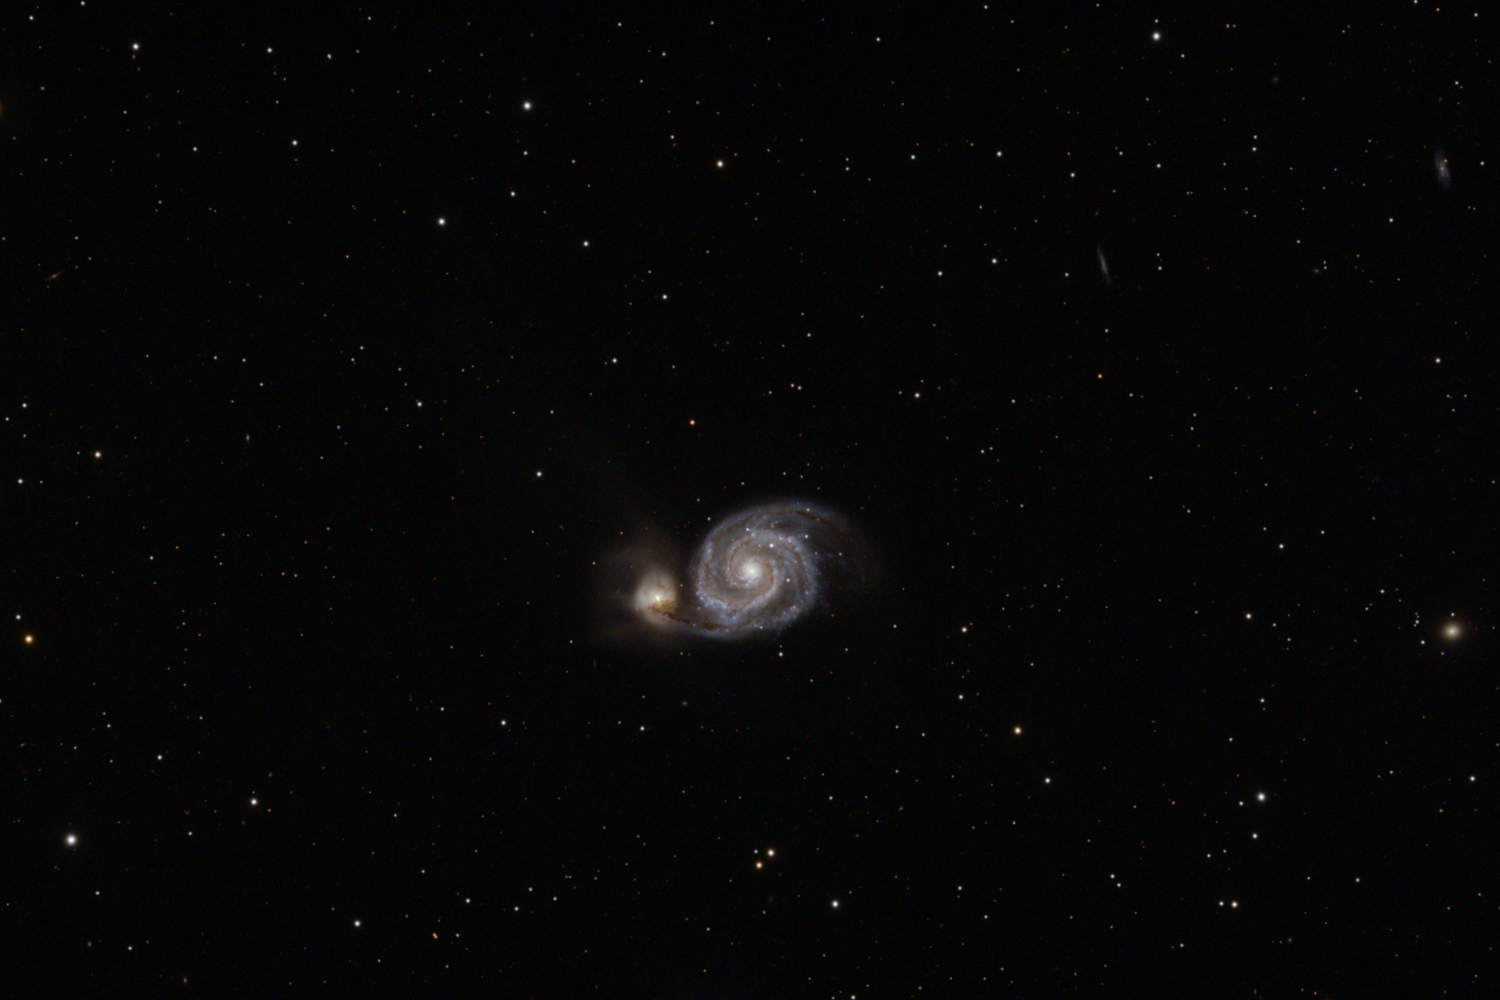 Arp 85, The Whirlpool Galaxy